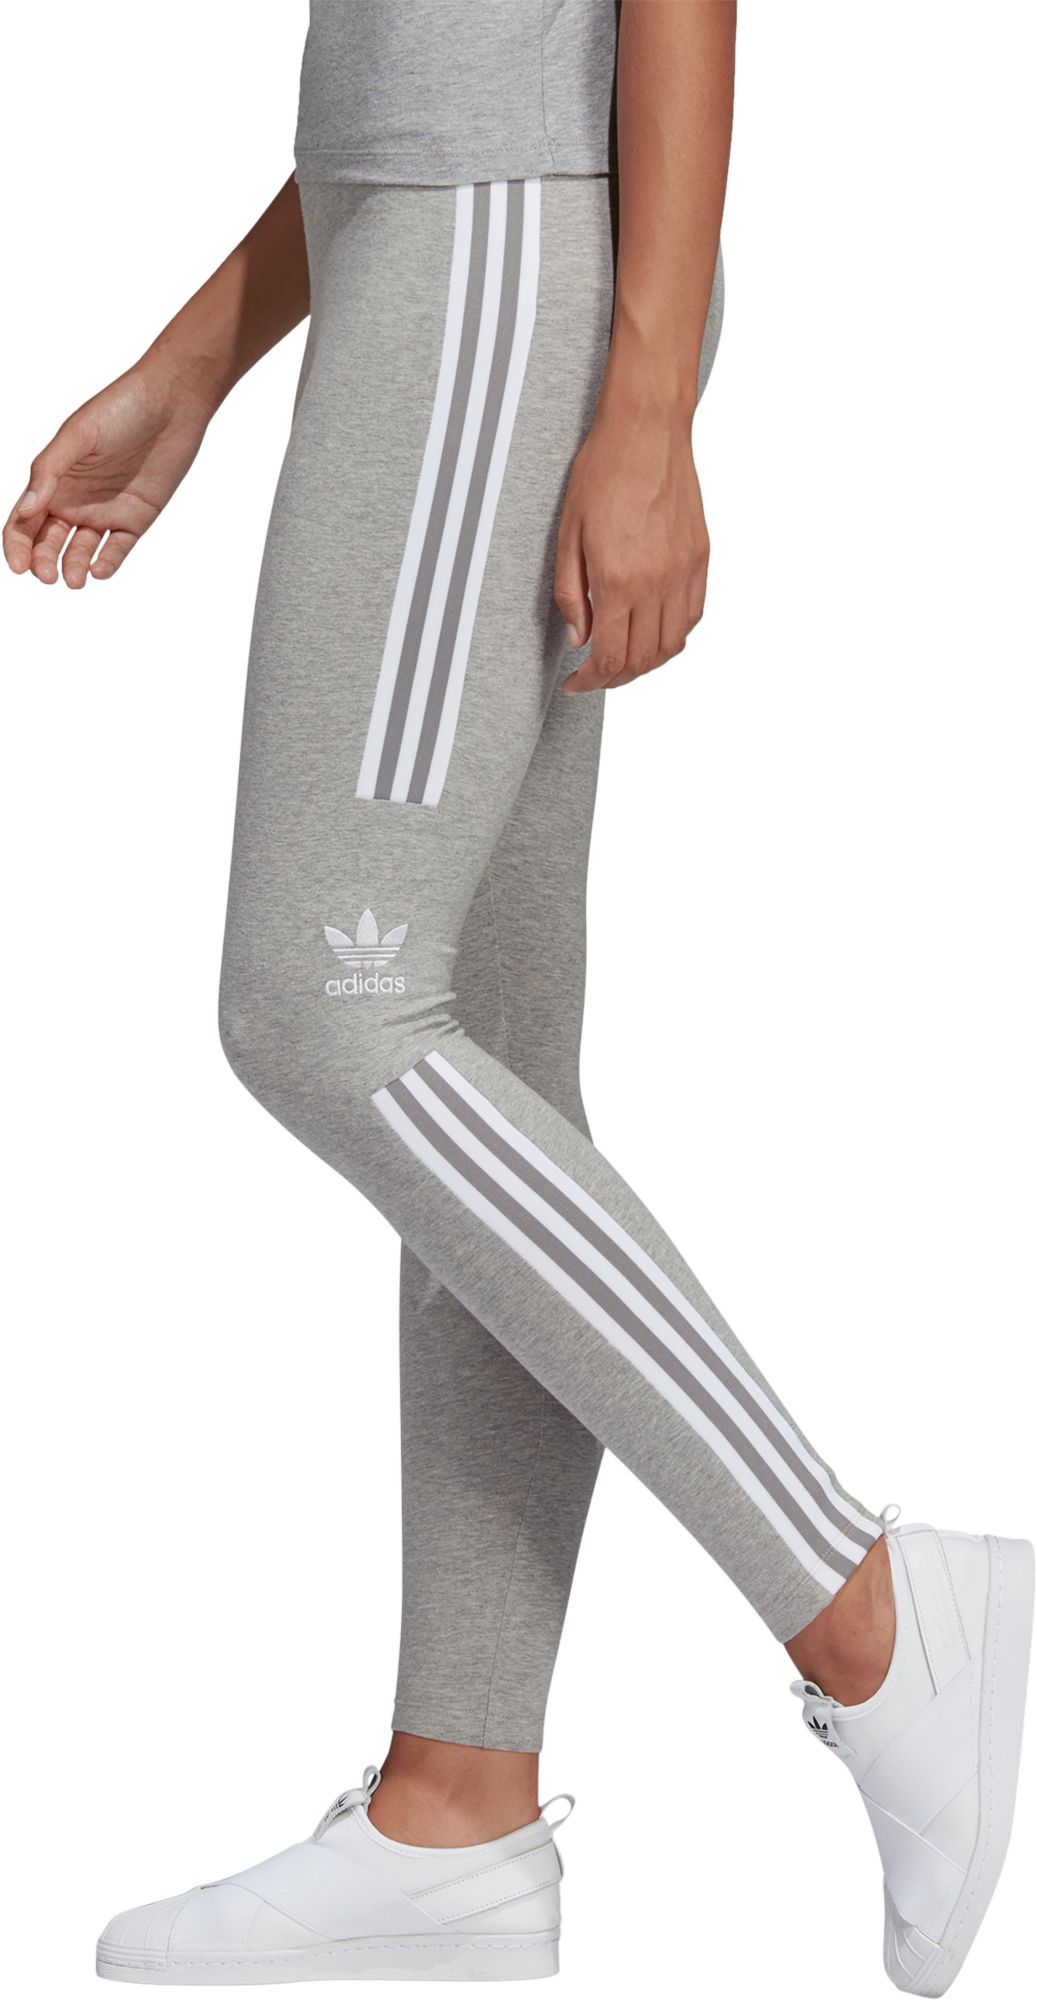 adidas leggings womens grey